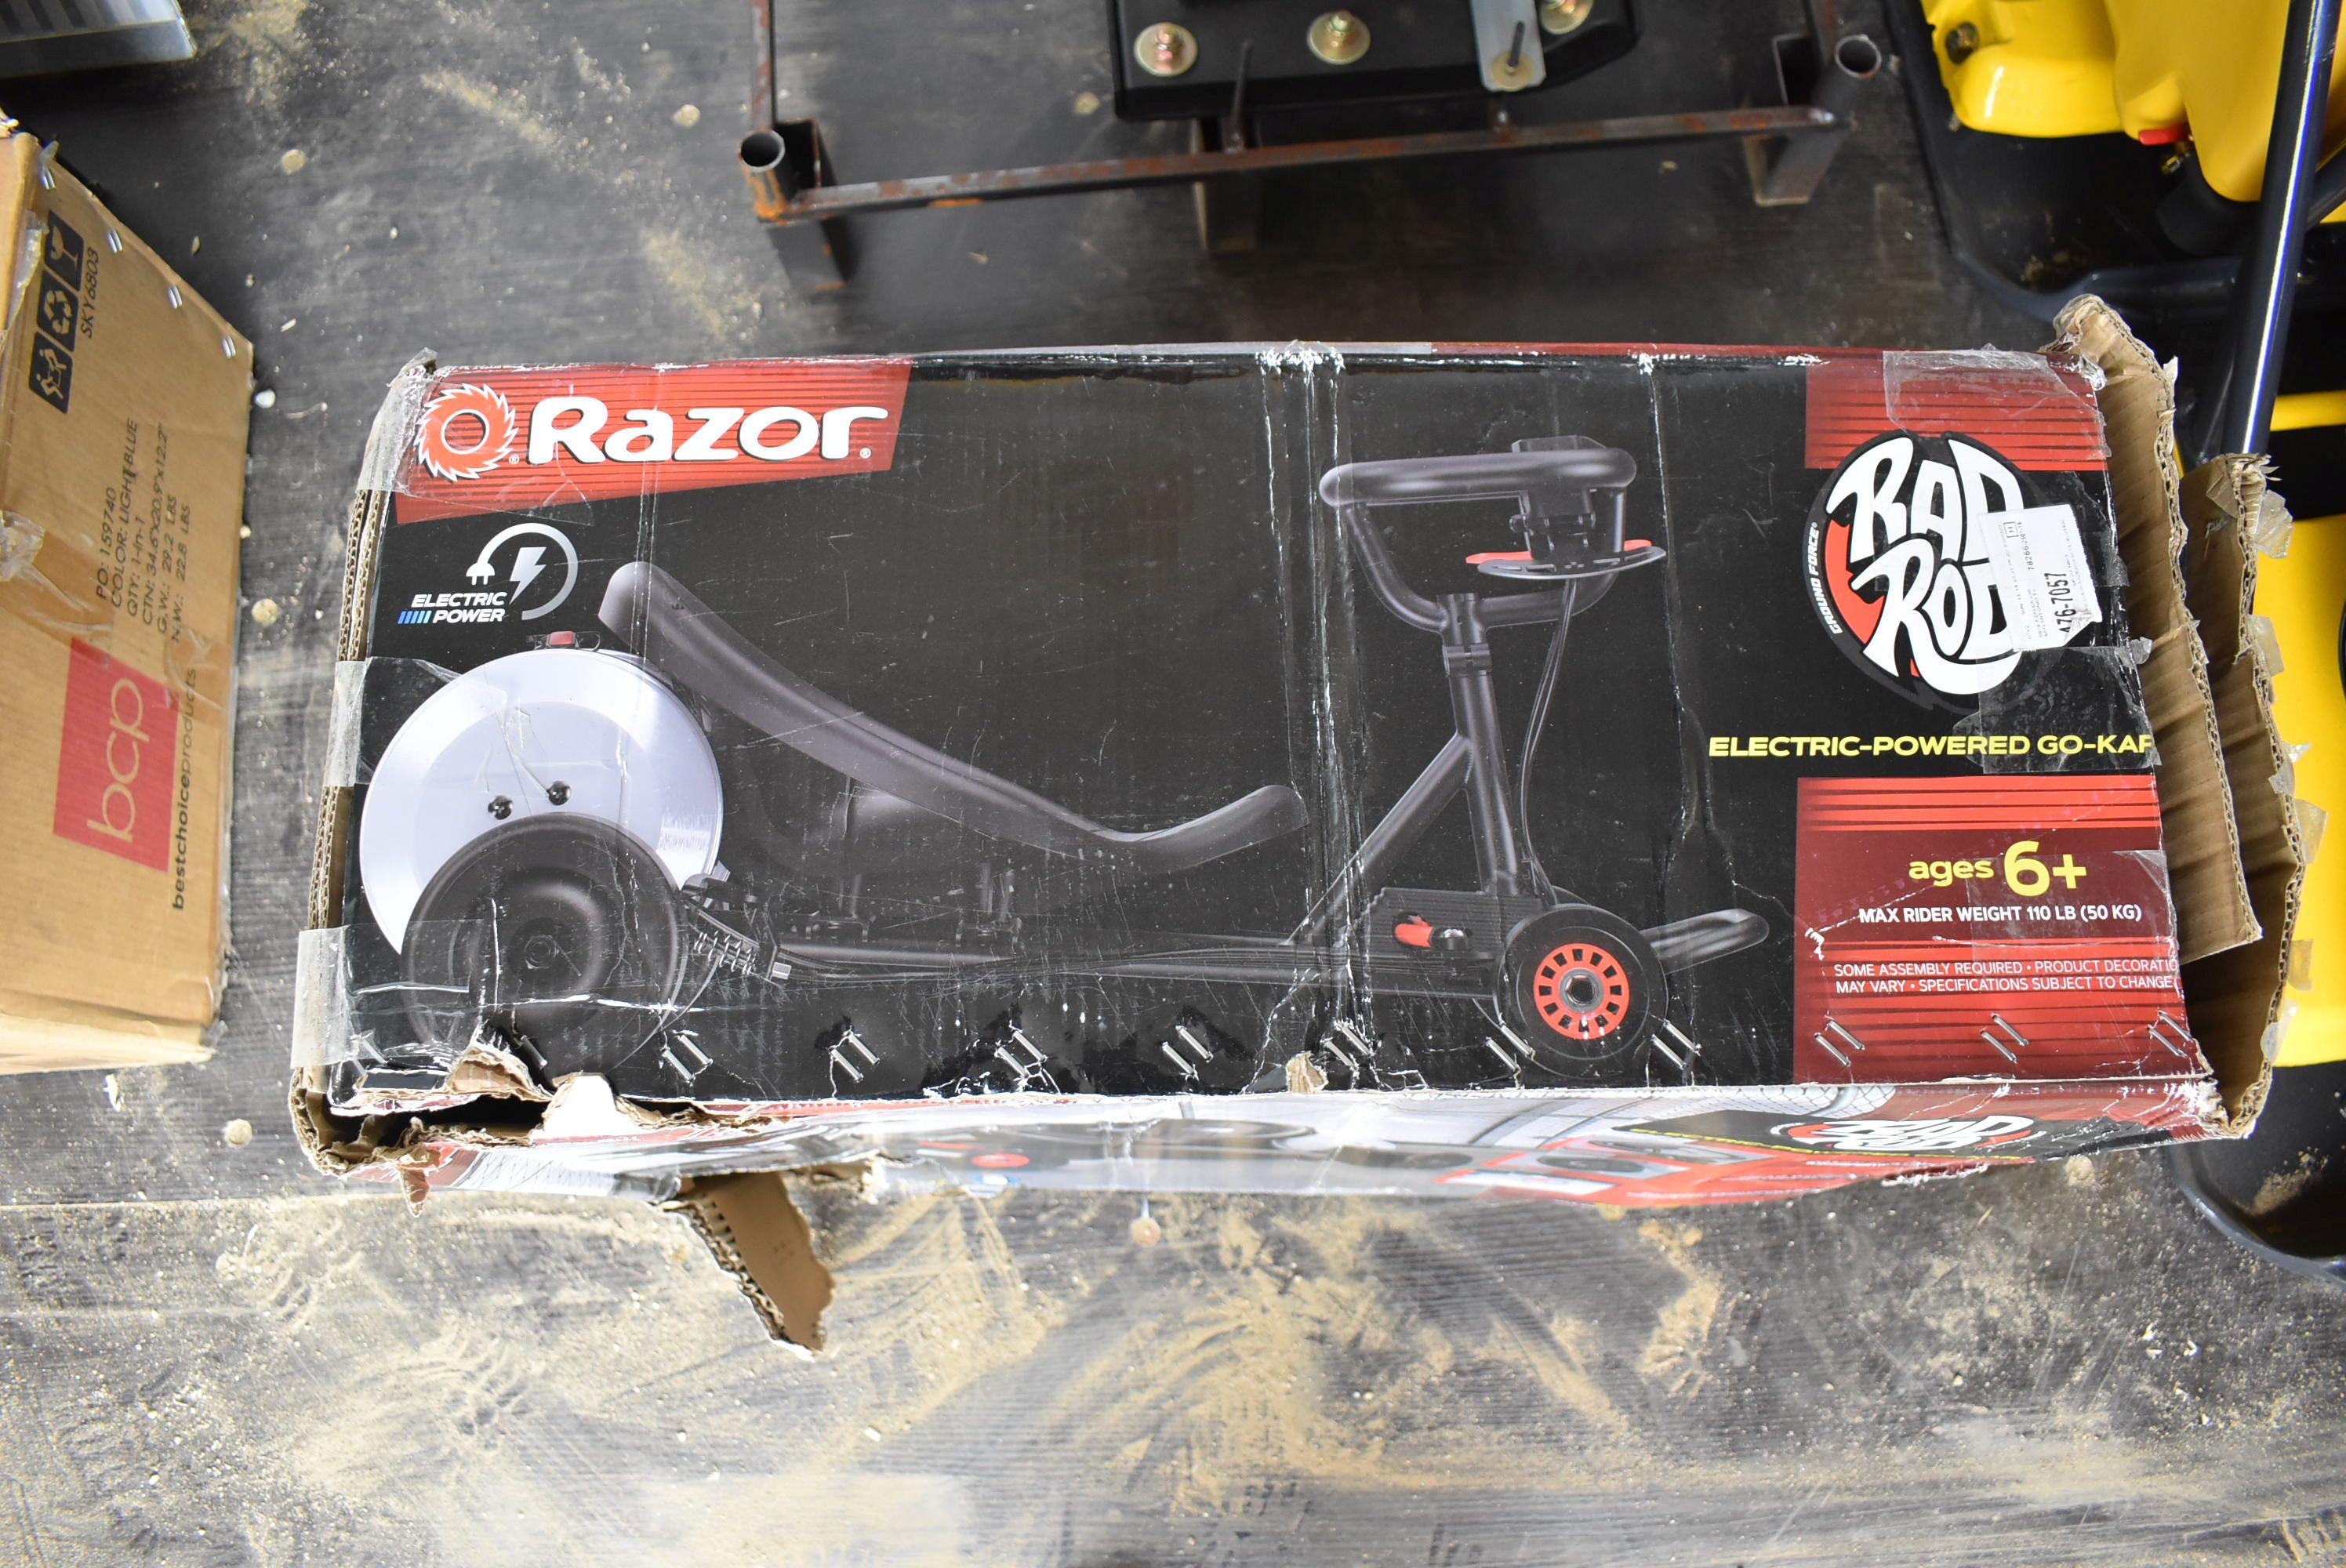 Razor Rad Rod electric powered go-kart, new in box